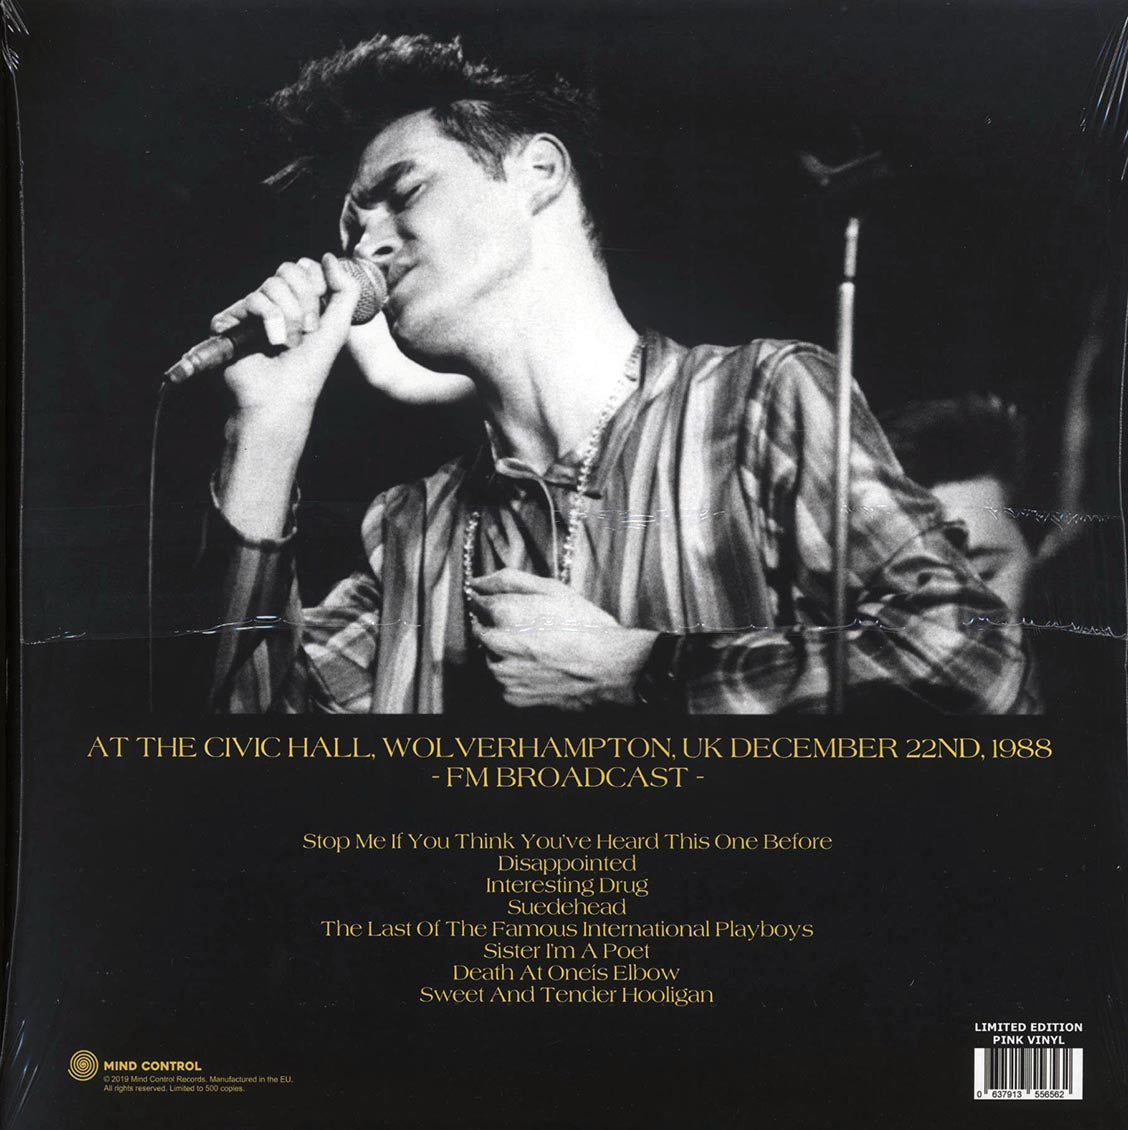 Morrissey - At The Civic Hall, Wolverhampton, UK December 22nd, 1988